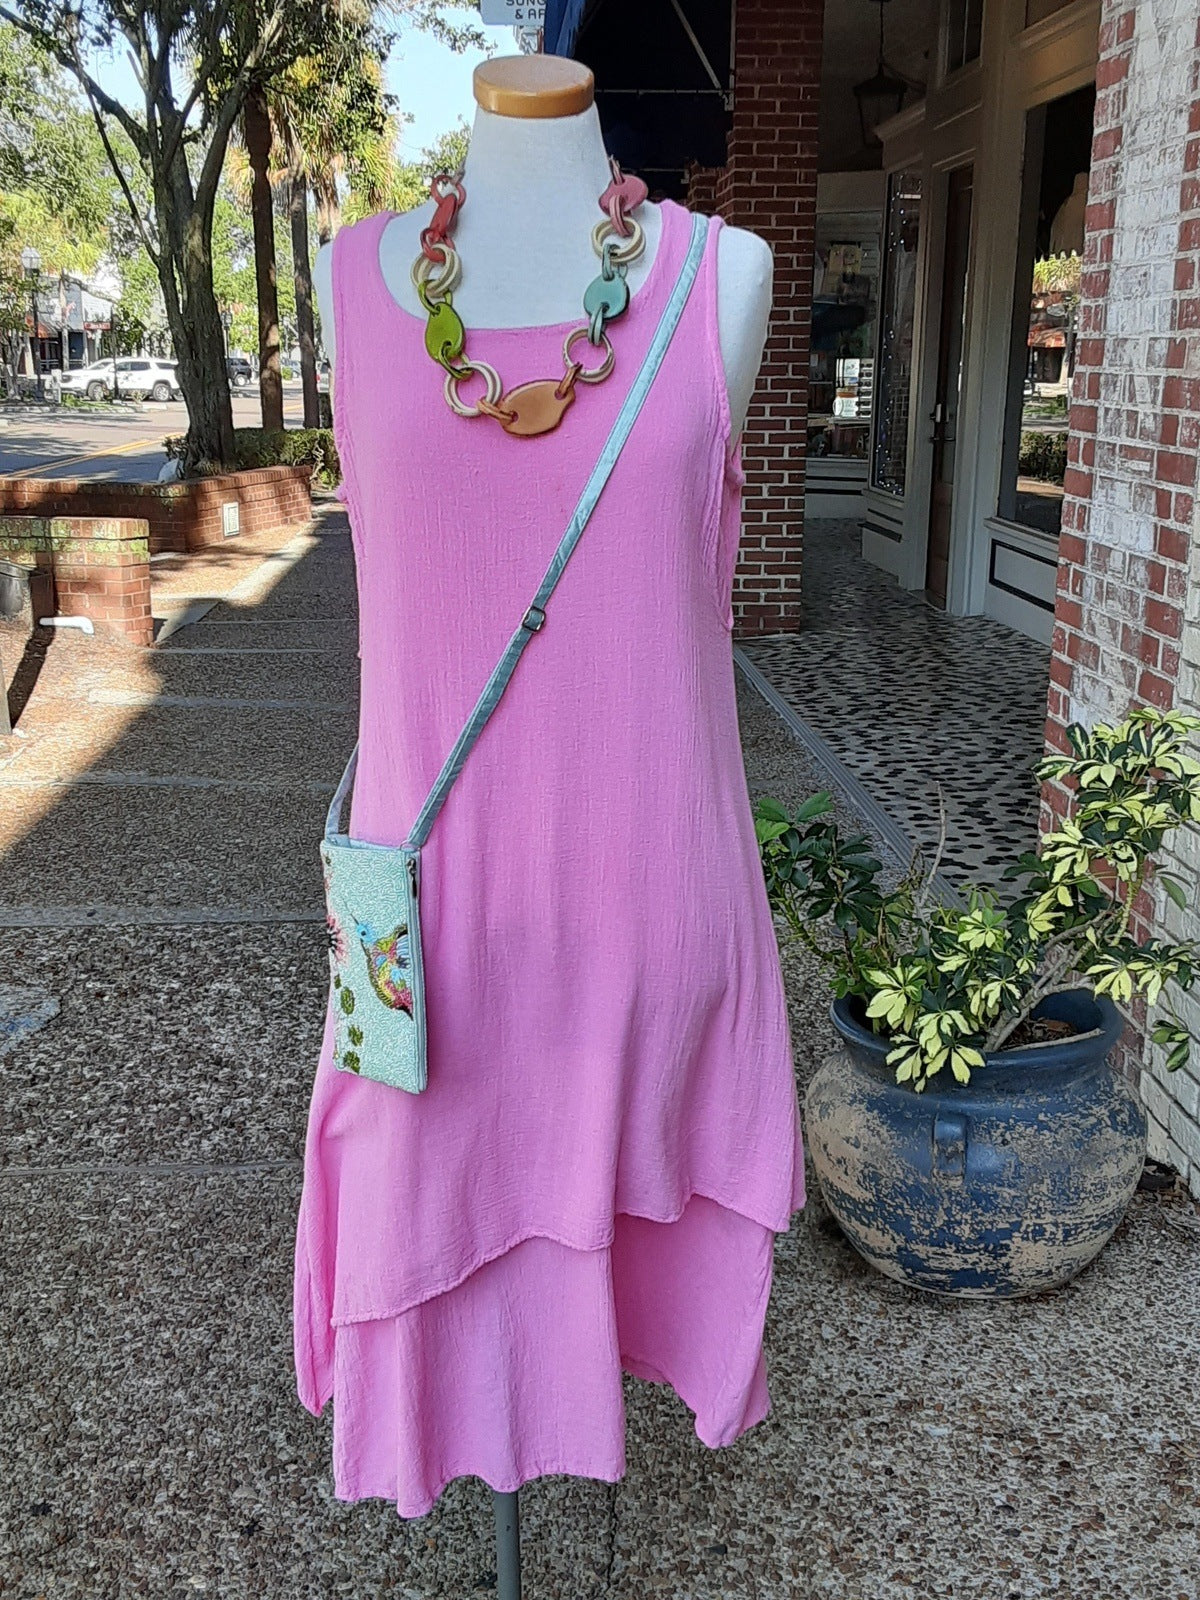 Hazel Double Layer Dress in Soft Cotton Gauze Now on Sale